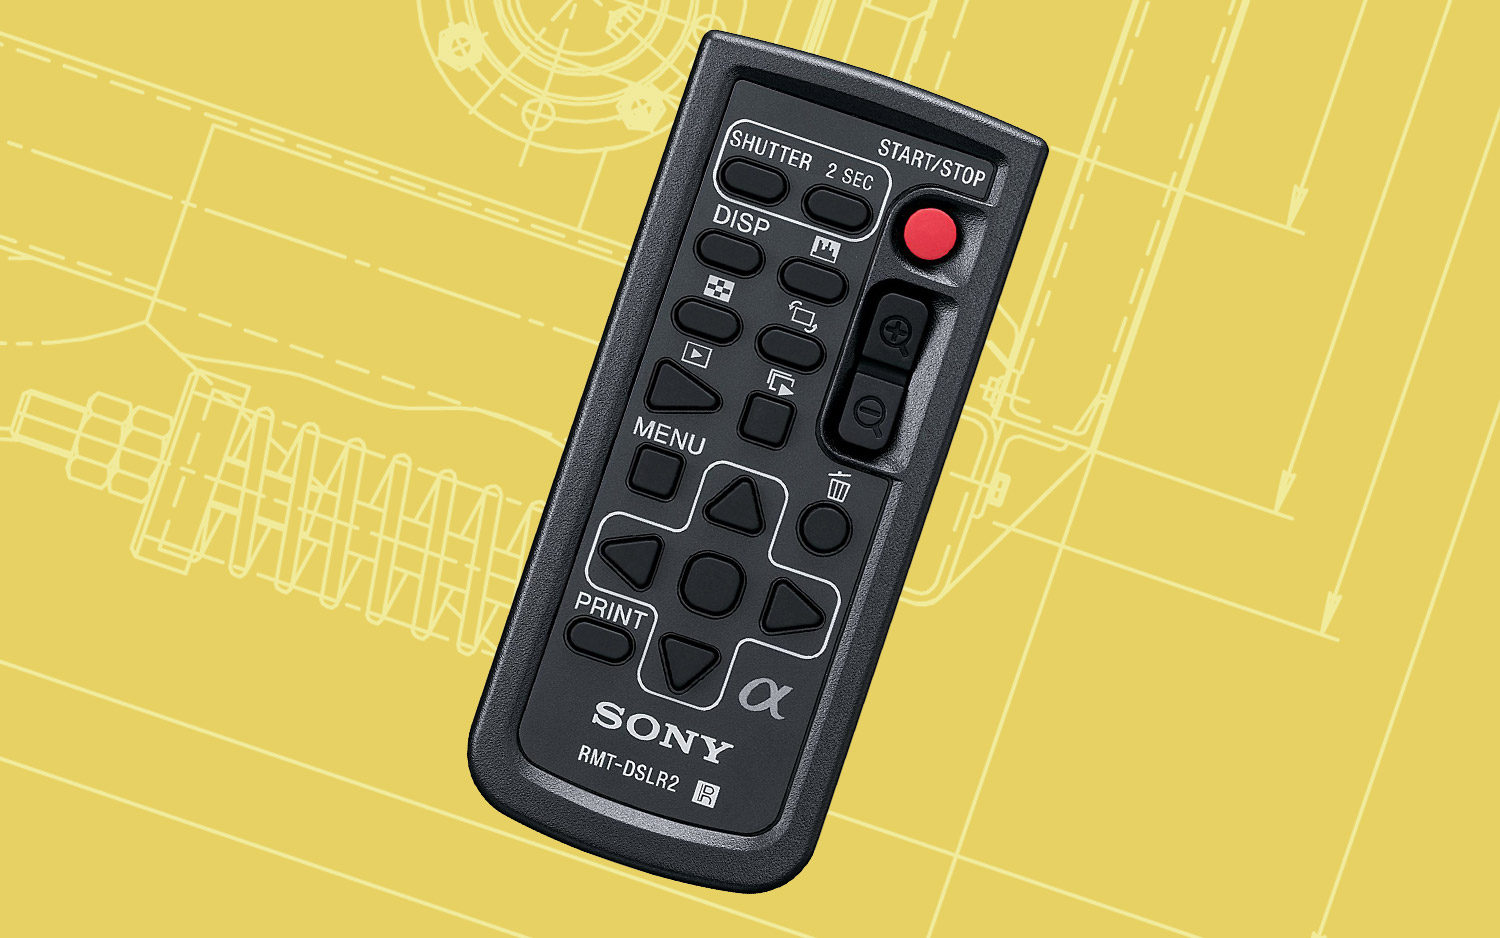 Best Sony A6000 accessories — Sony RMTDSLR2 wireless remote